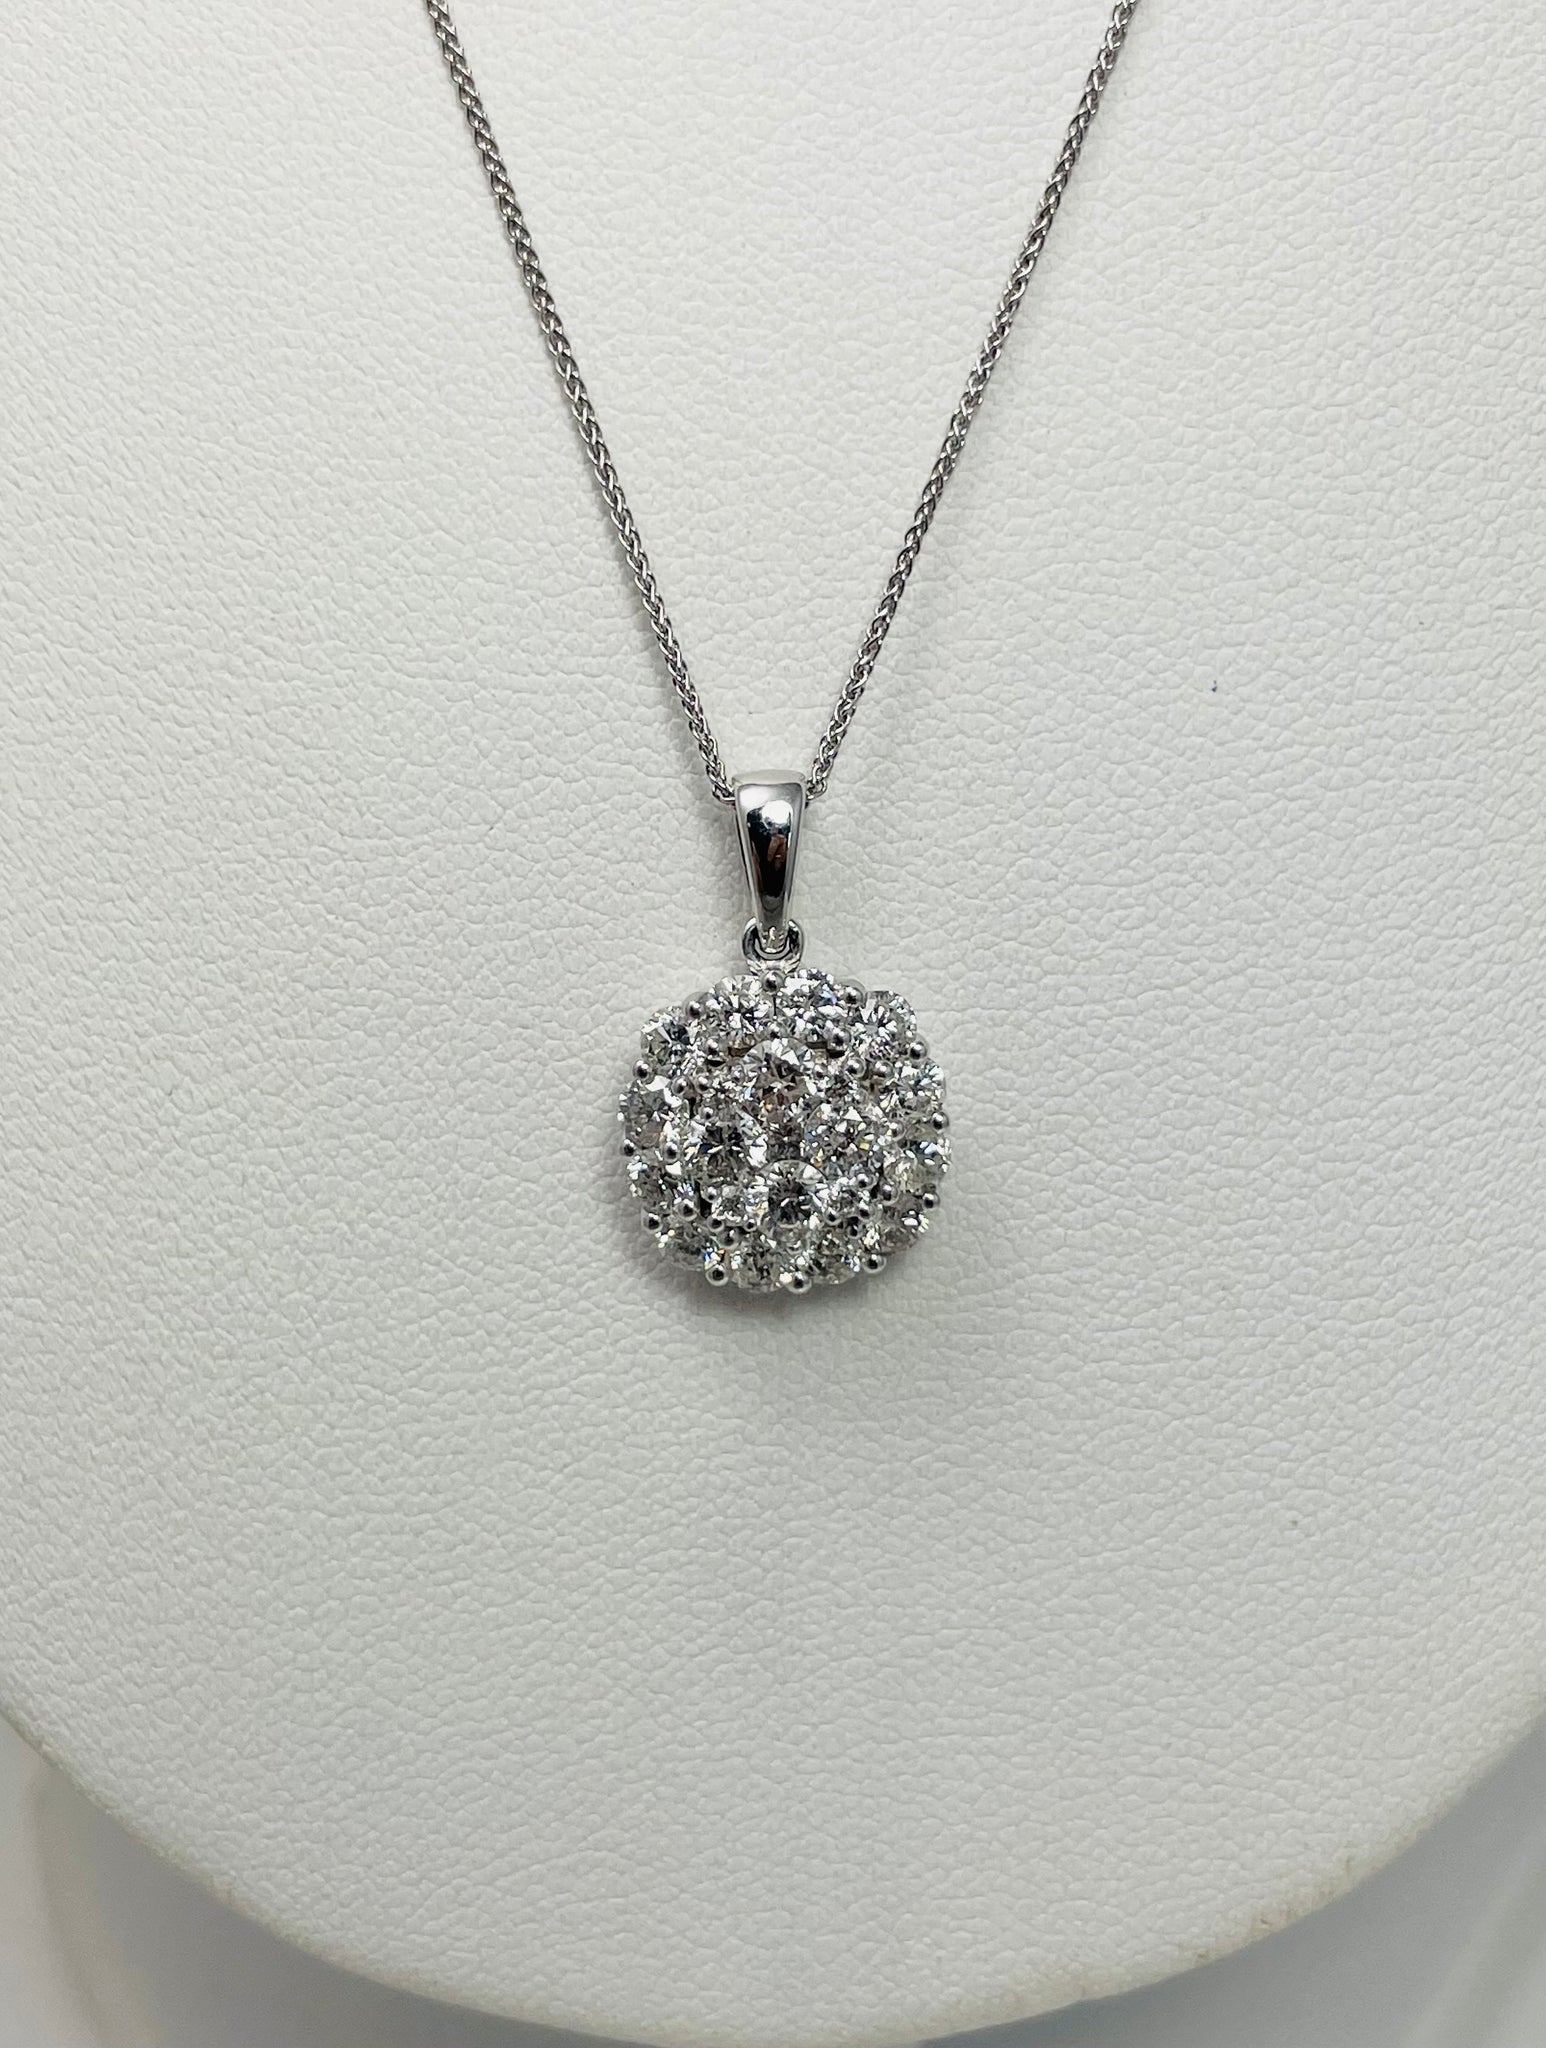 New! 18" 14k White Gold 1.52ctw Natural Diamond Pendant Necklace